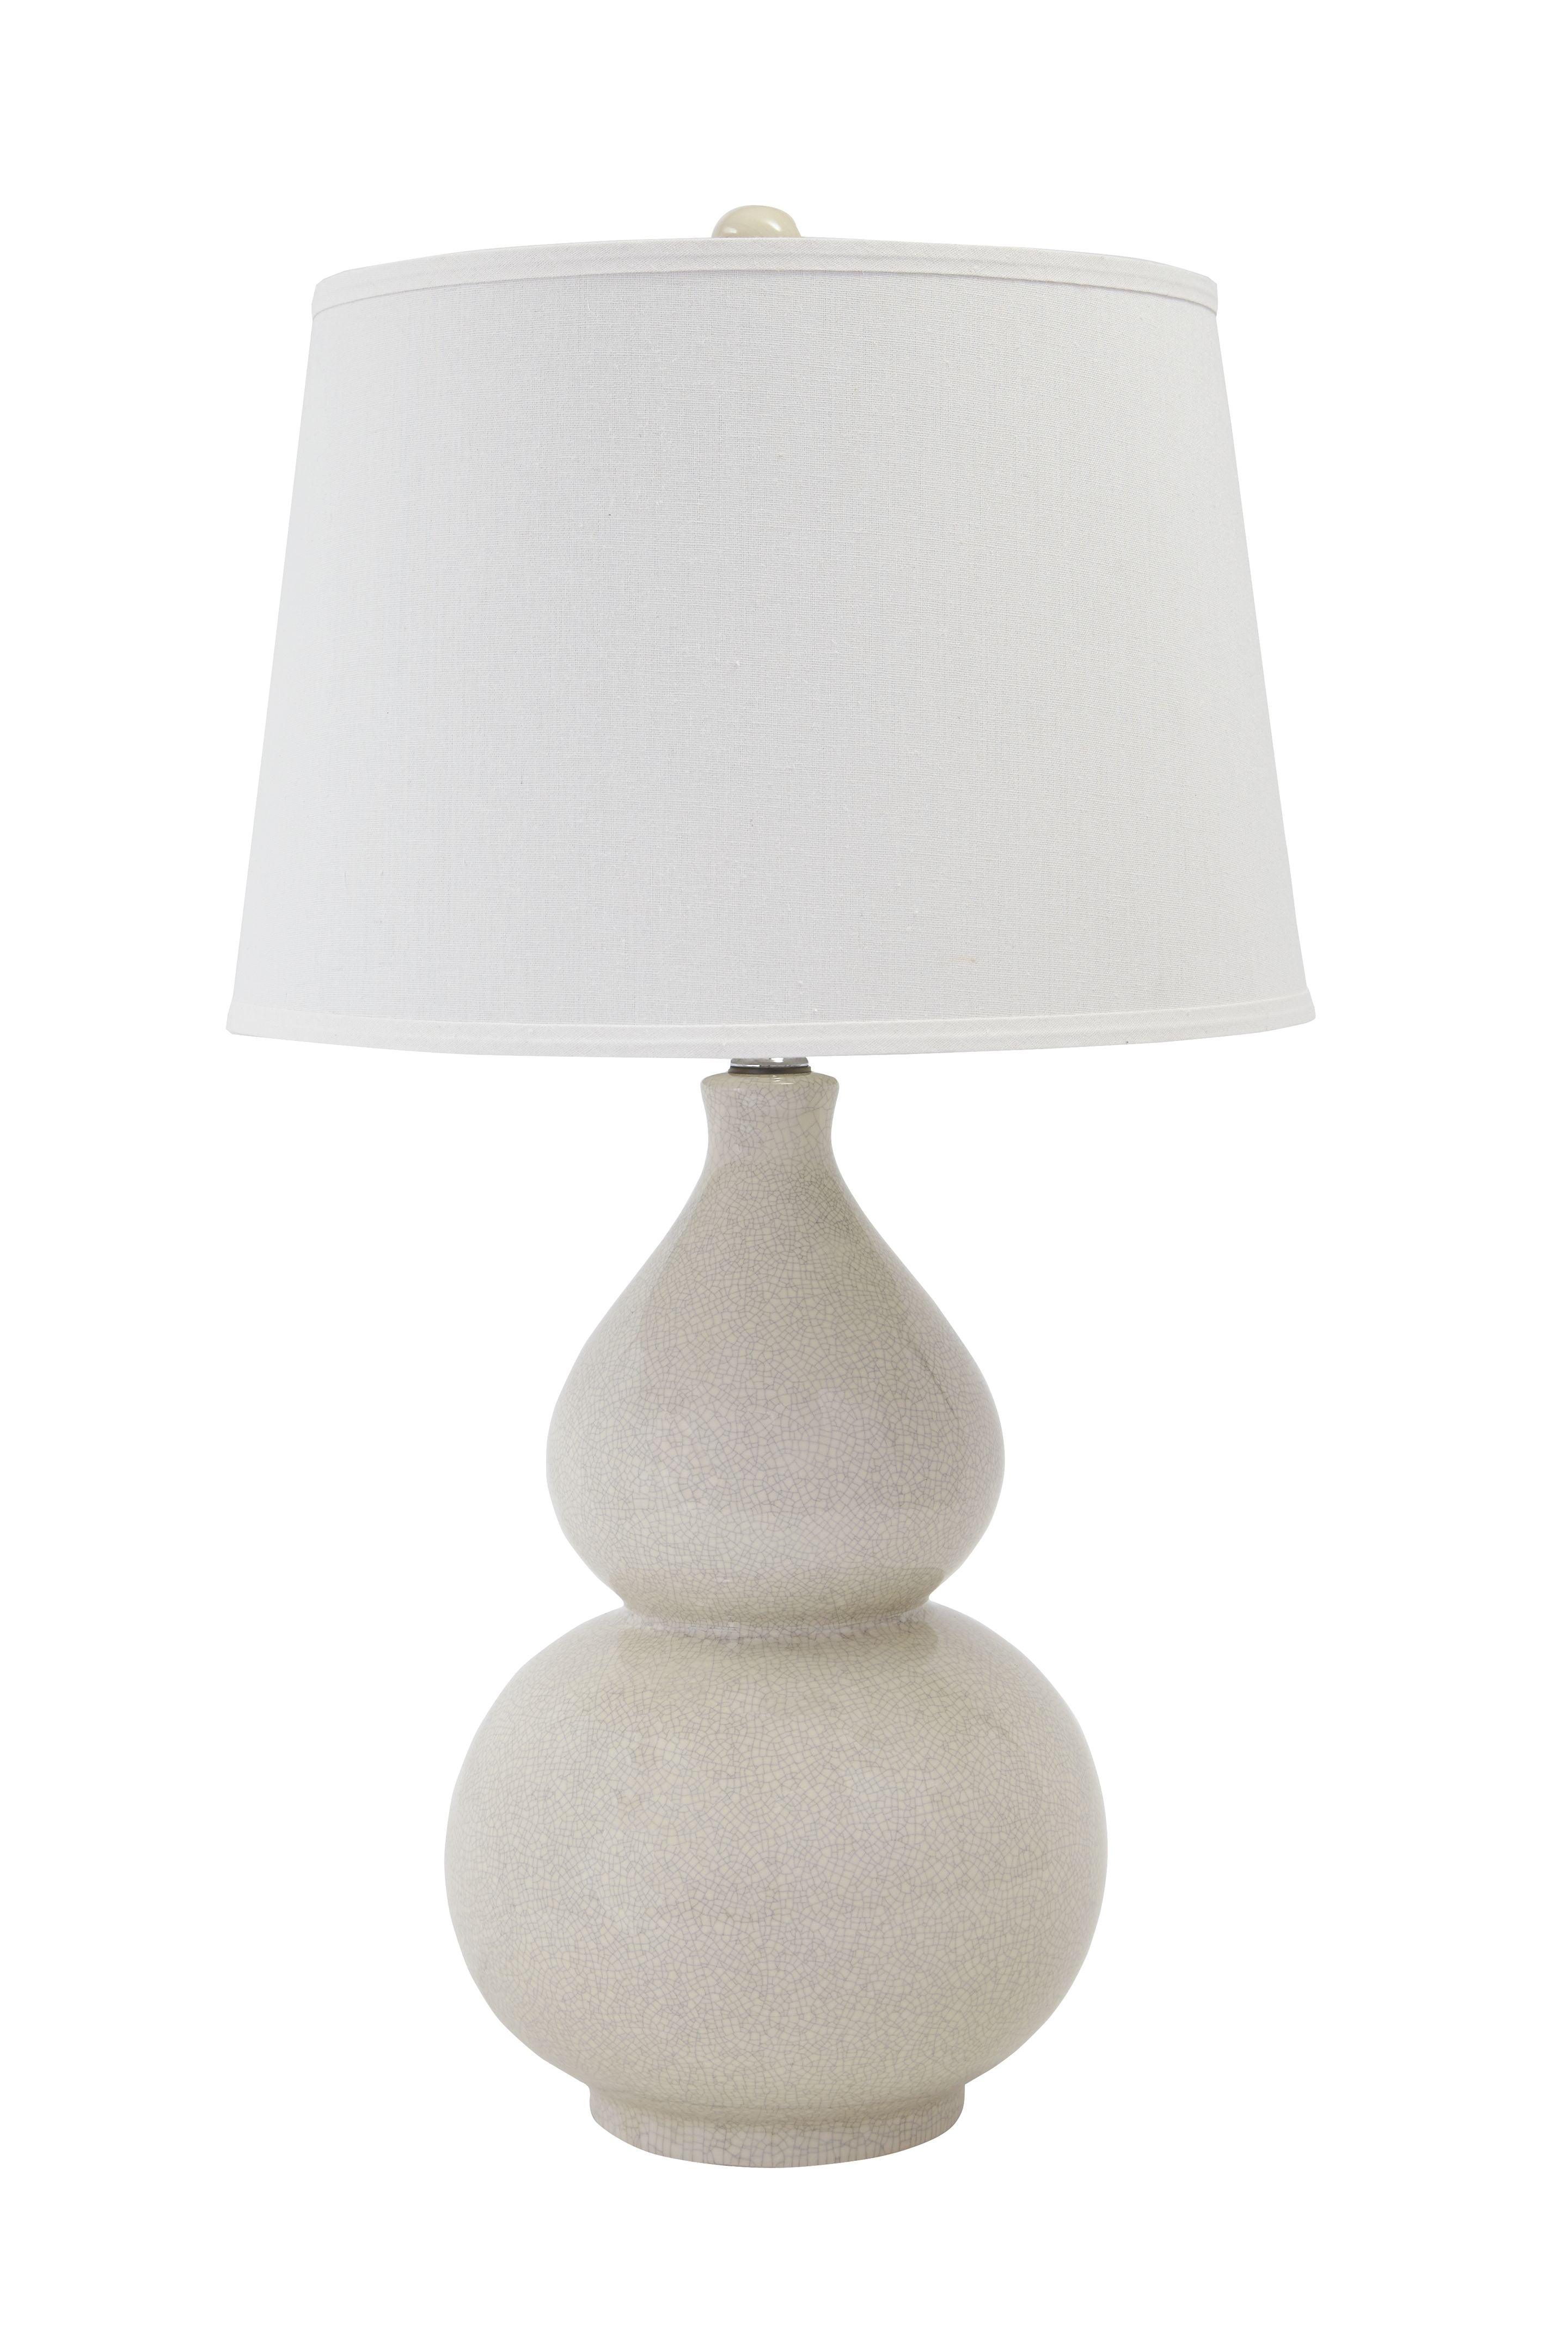 Ashley Furniture - Saffi - Cream - Ceramic Table Lamp - 5th Avenue Furniture